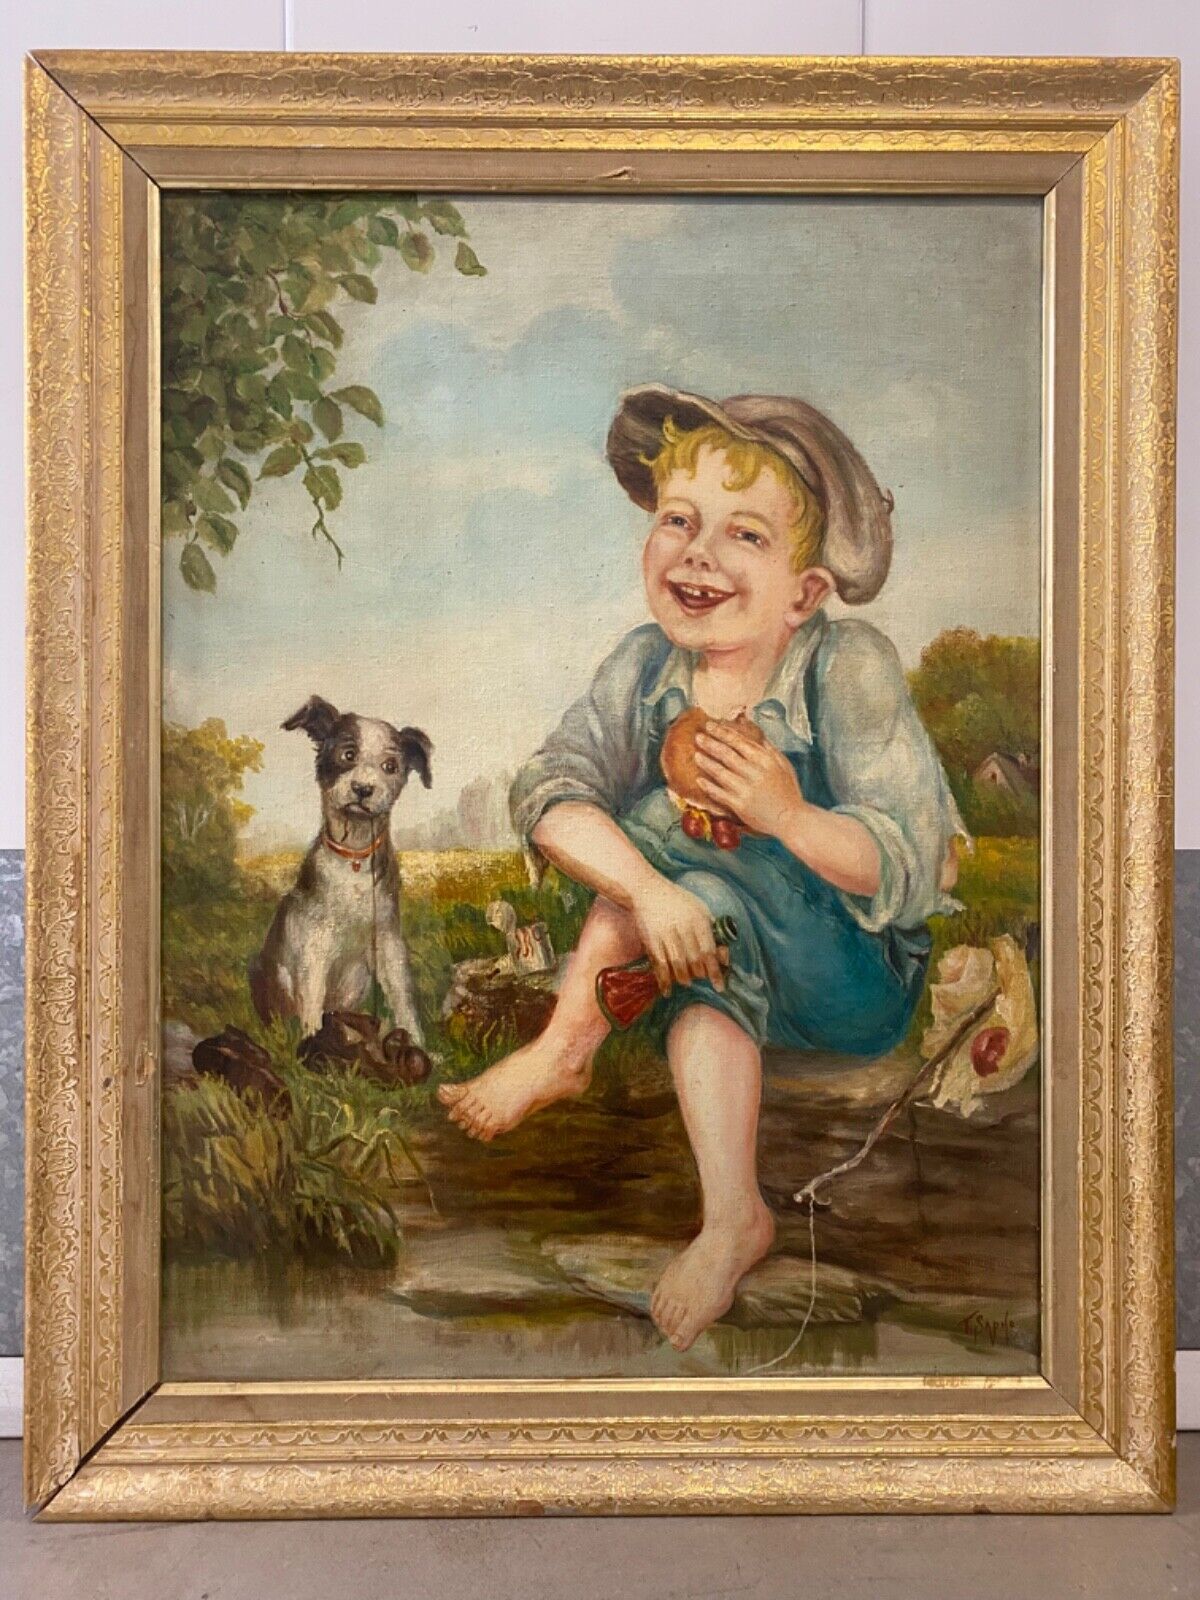 ðŸ”¥ Antique WPA New Deal Southern Folk Art Oil Painting, Fishing Boy & Dog 1930s